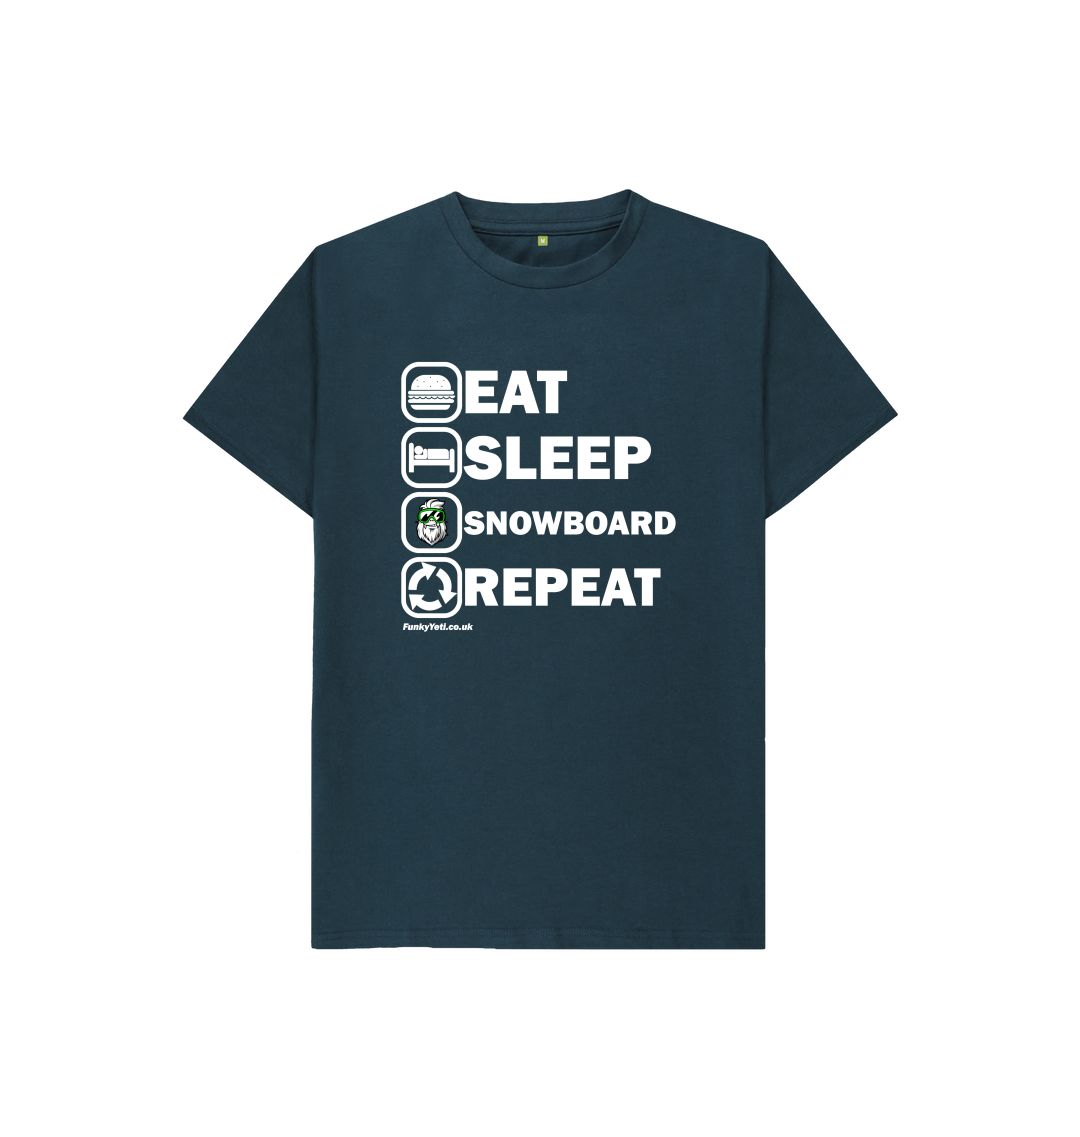 Denim Blue Funky Yeti Kids Tee - Eat Sleep Snowboard Repeat